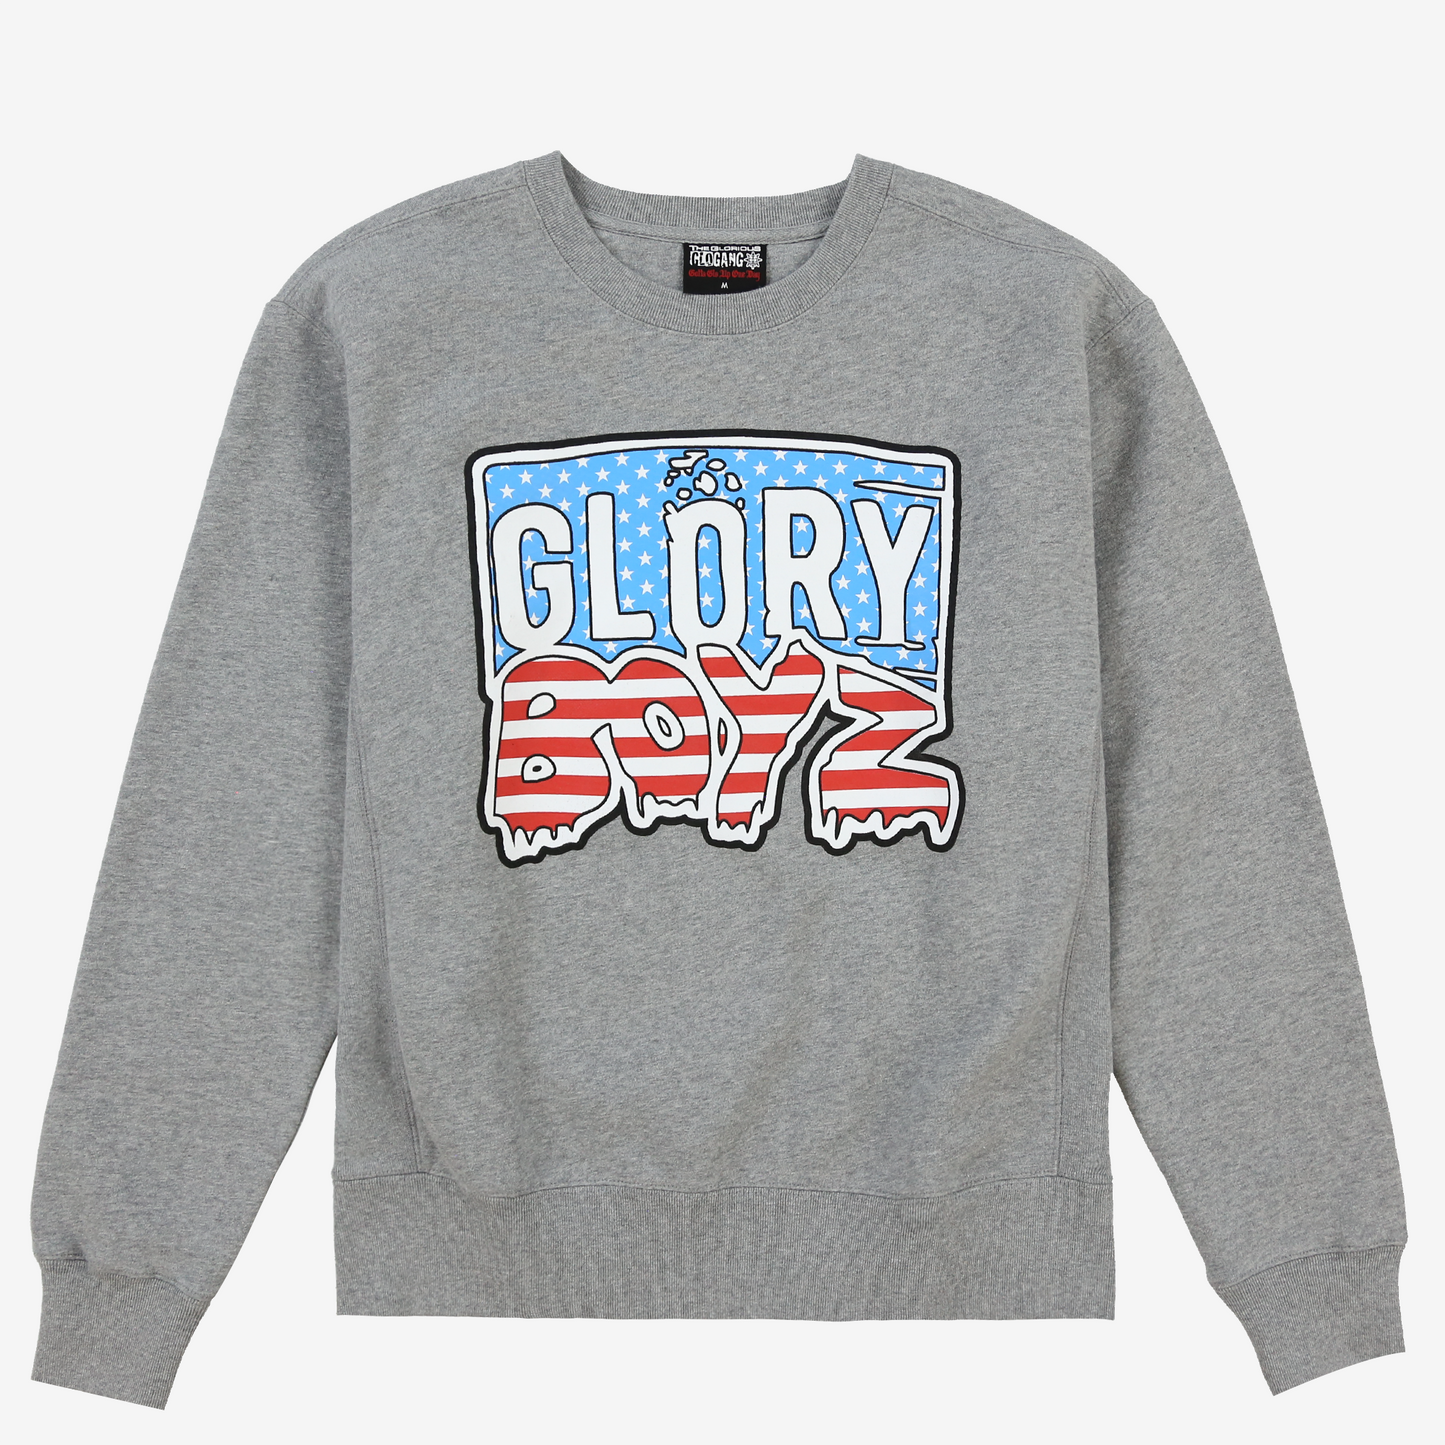 Glory Boyz Fleece Crewneck Sweater (Heather Grey)